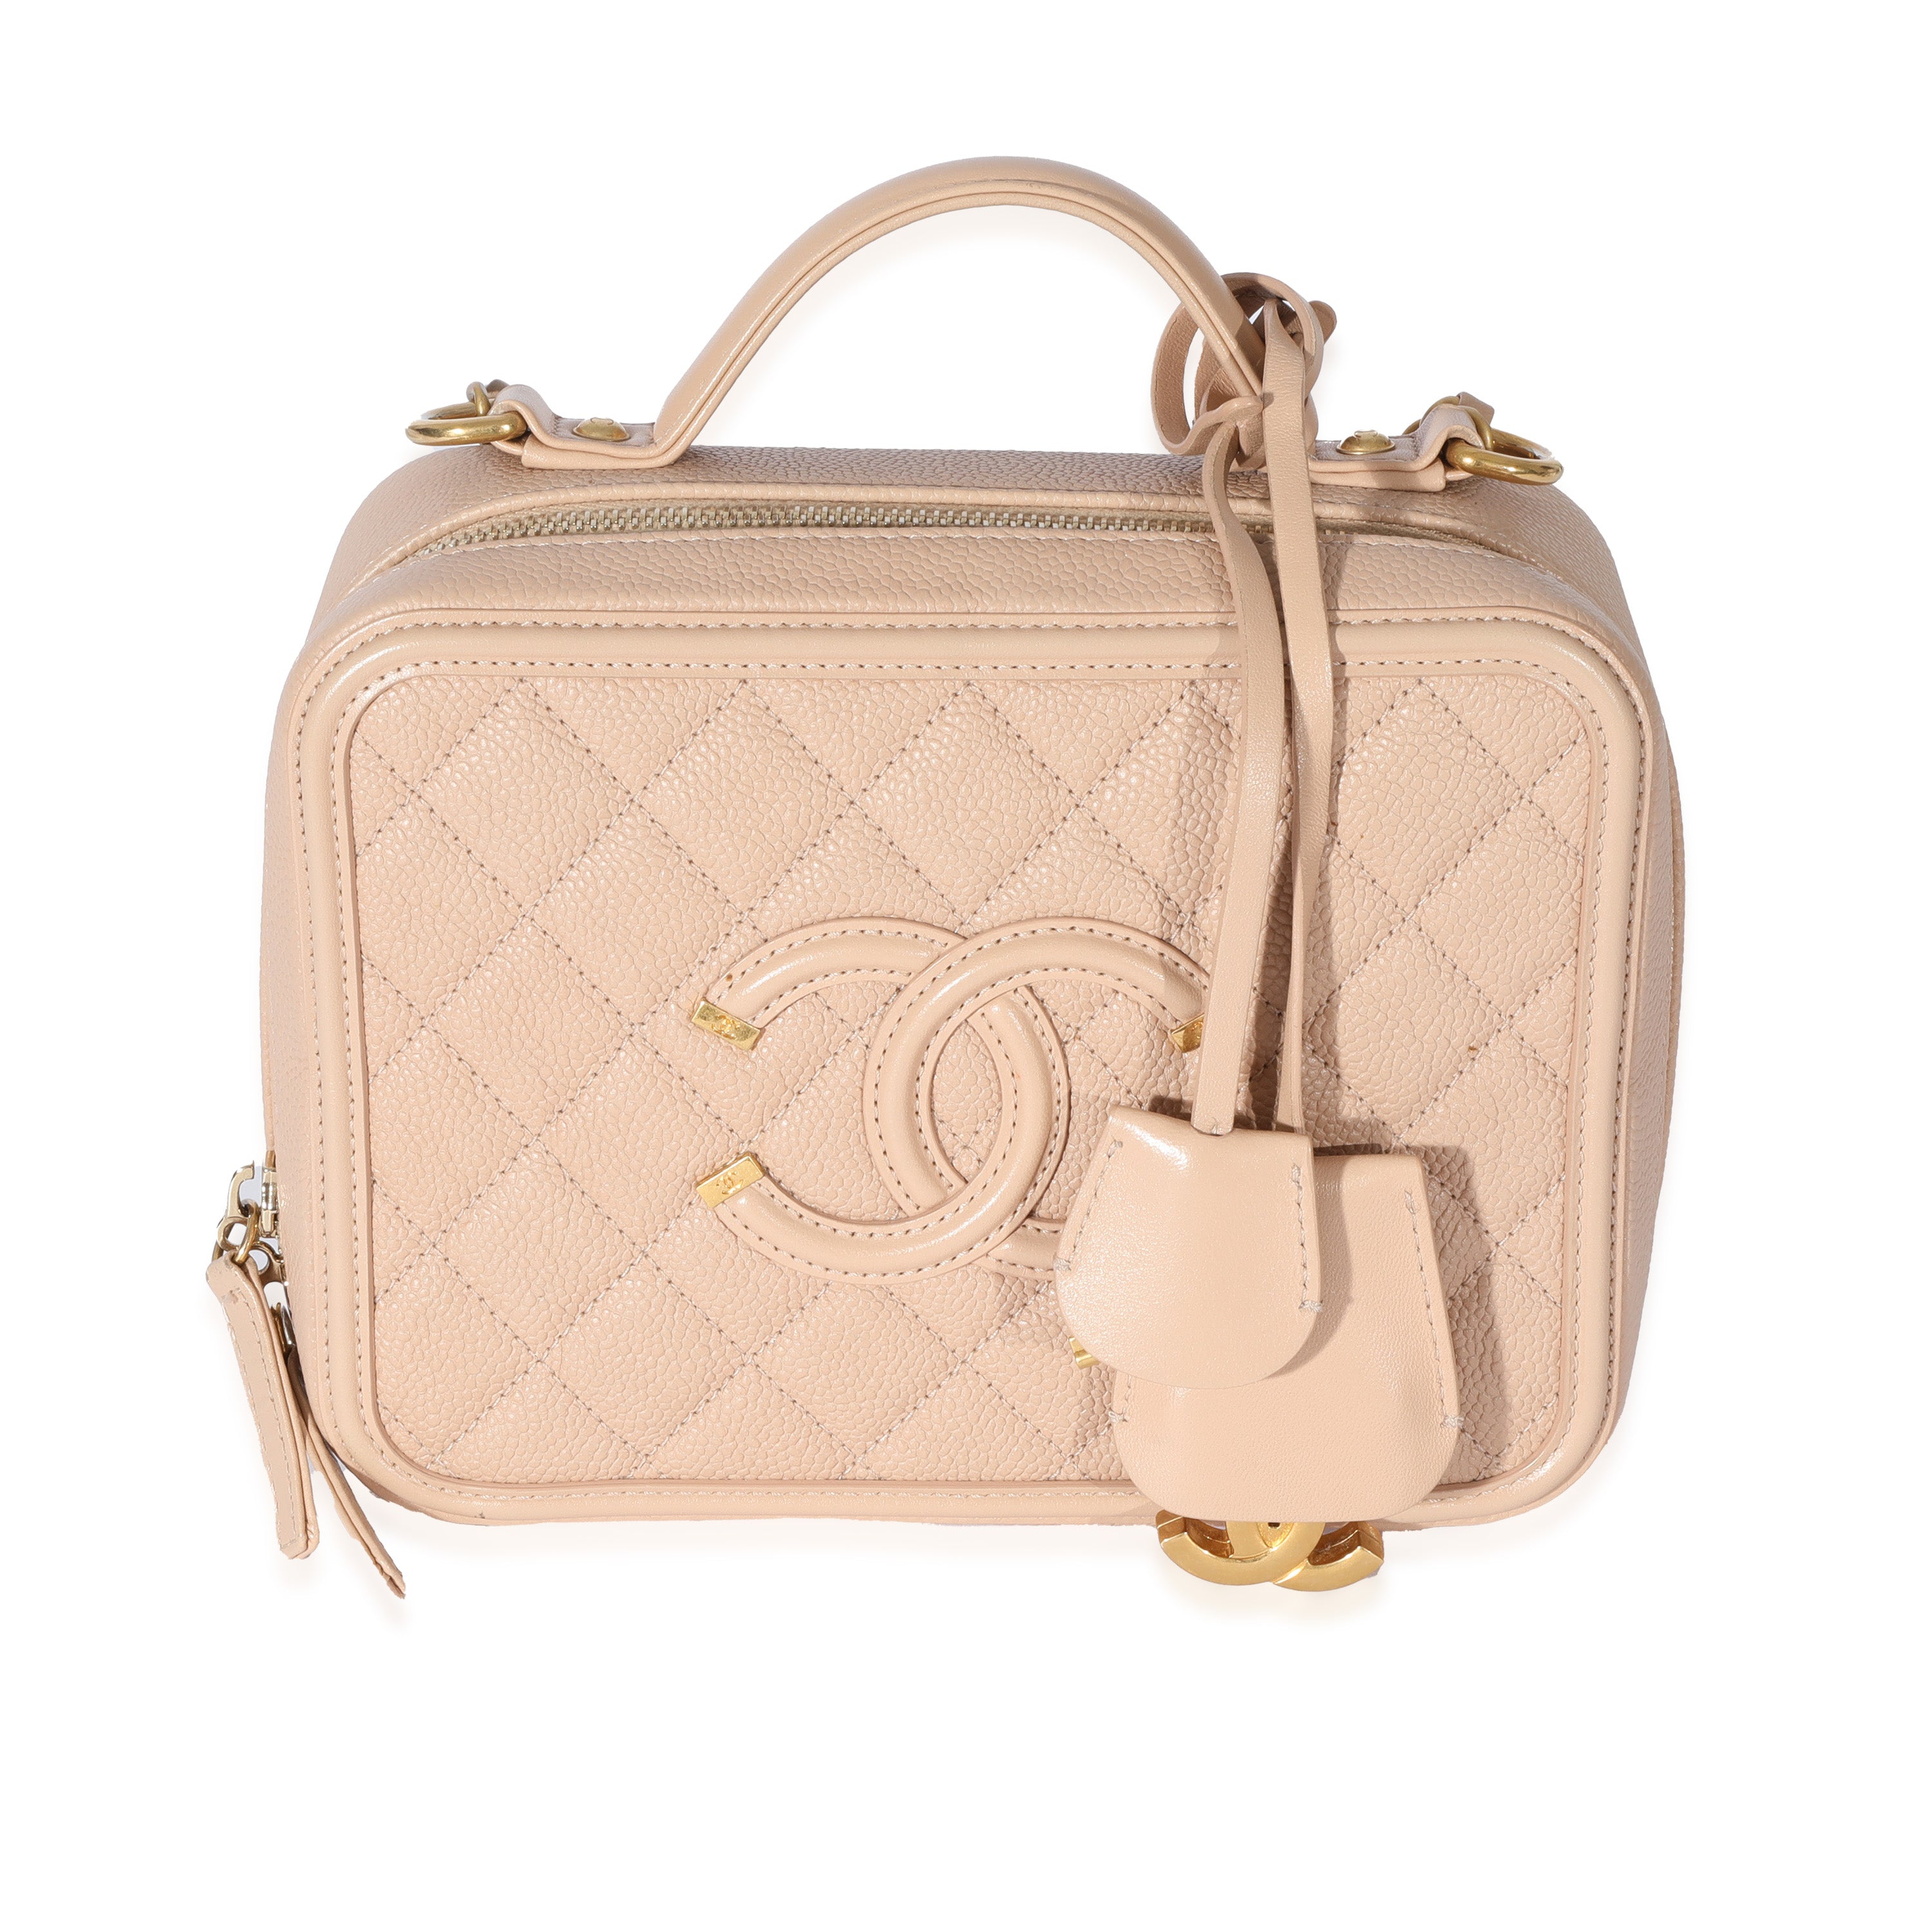 Chanel Vanity Case 2018 - 2 For Sale on 1stDibs  chanel vanity case gold  ball, chanel vanity bag white, chanel vanity case bag price